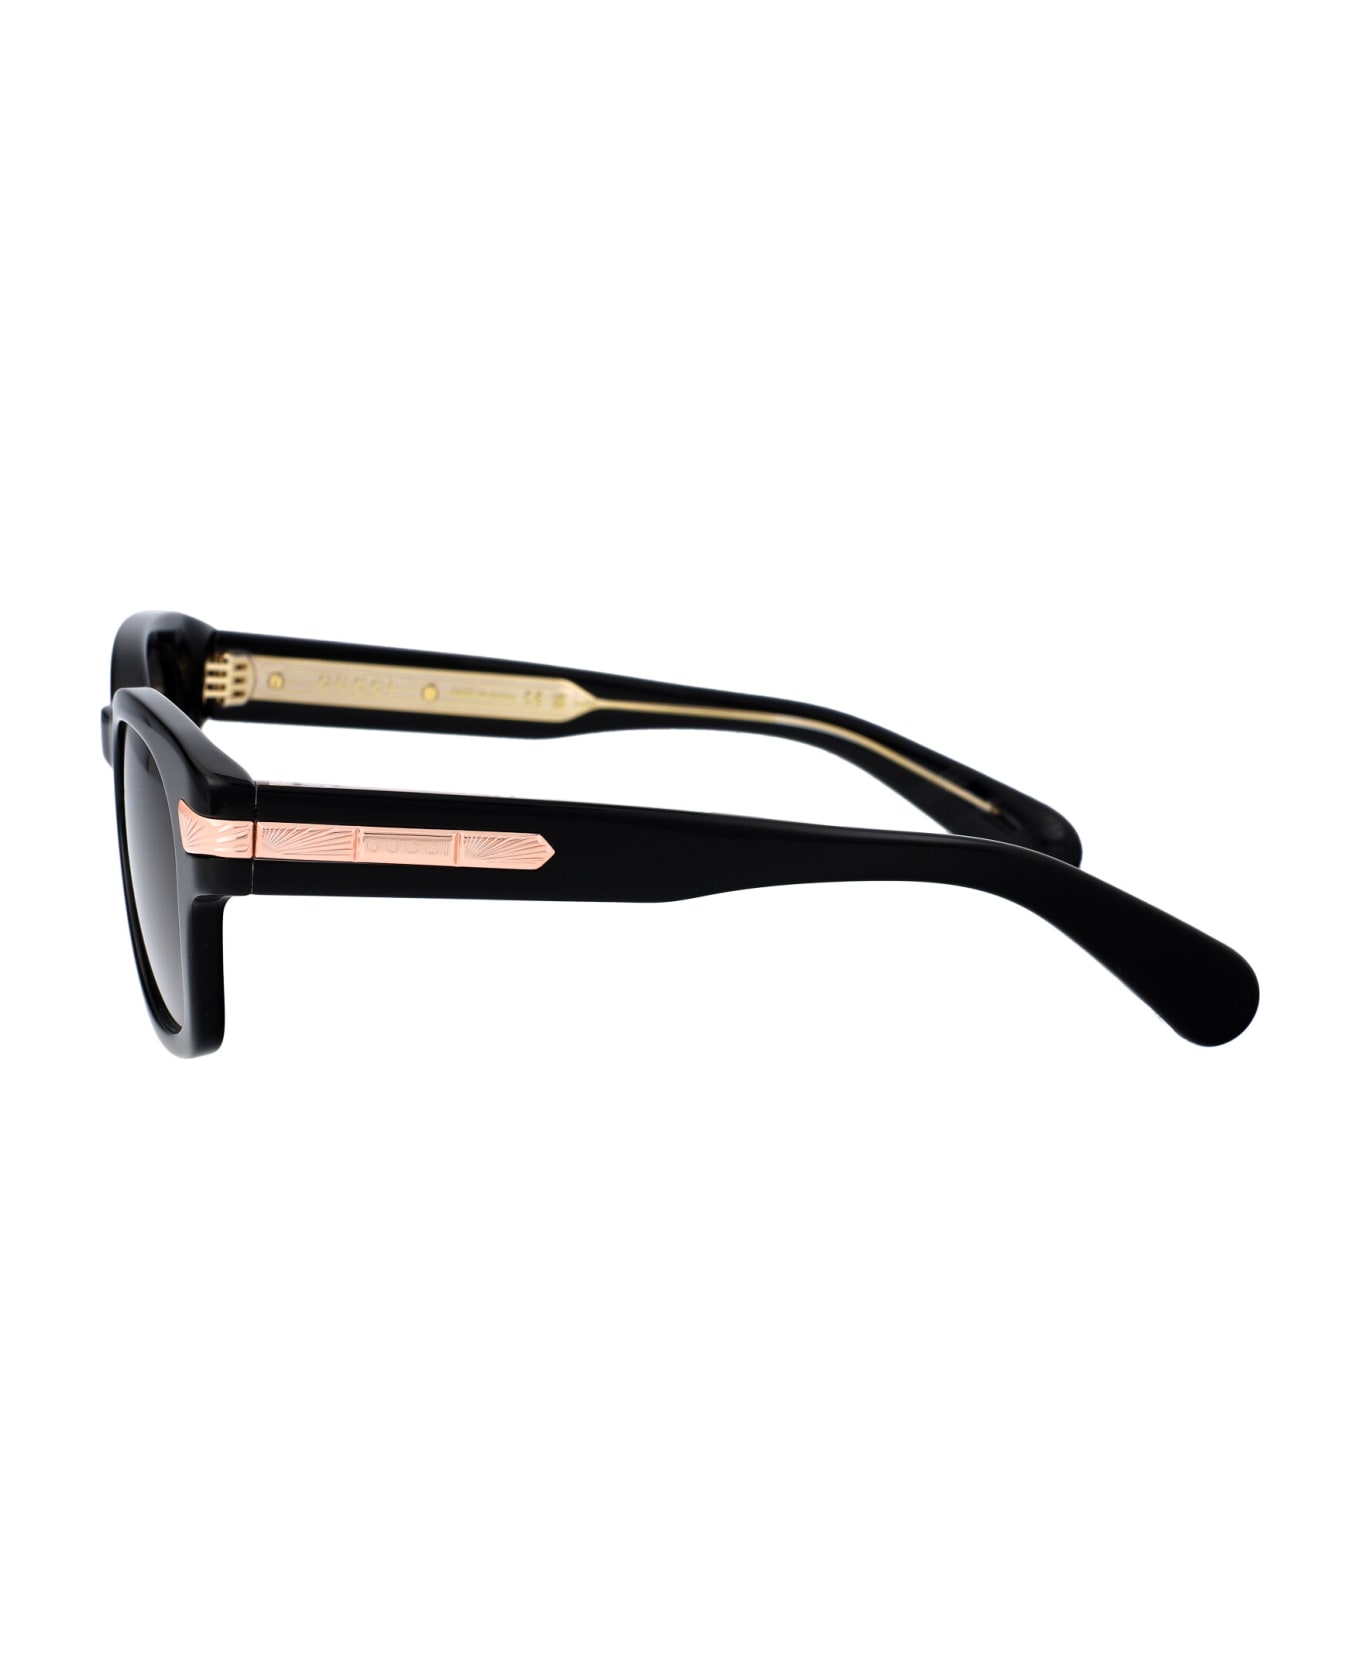 Gucci Eyewear Gg1518s Sunglasses - 001 BLACK BLACK GREY サングラス